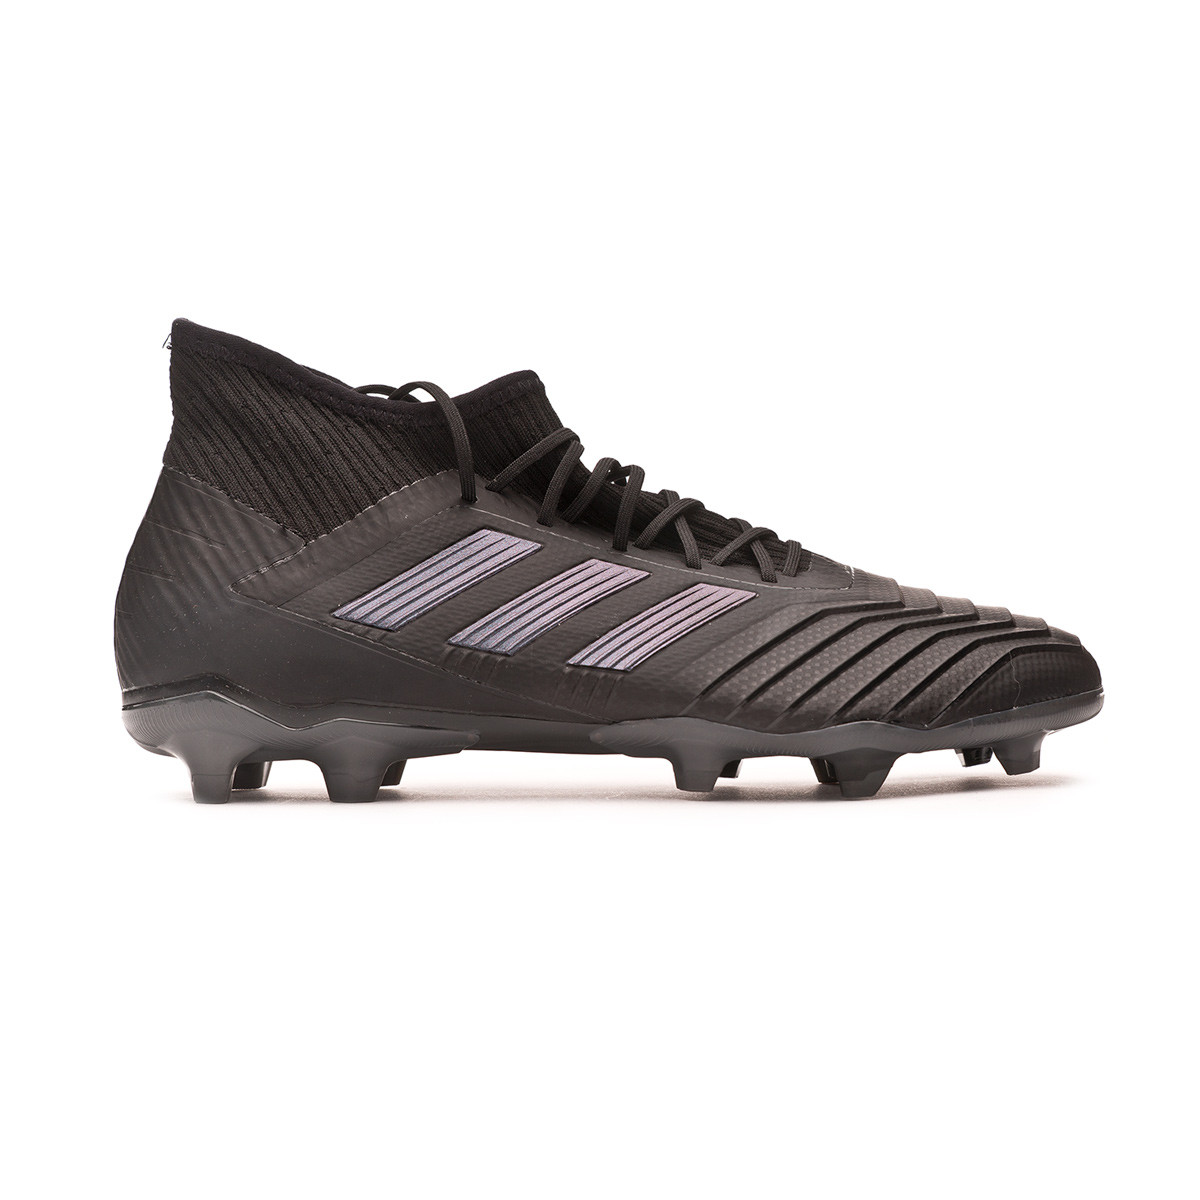 adidas predator 19.2 fg football boots